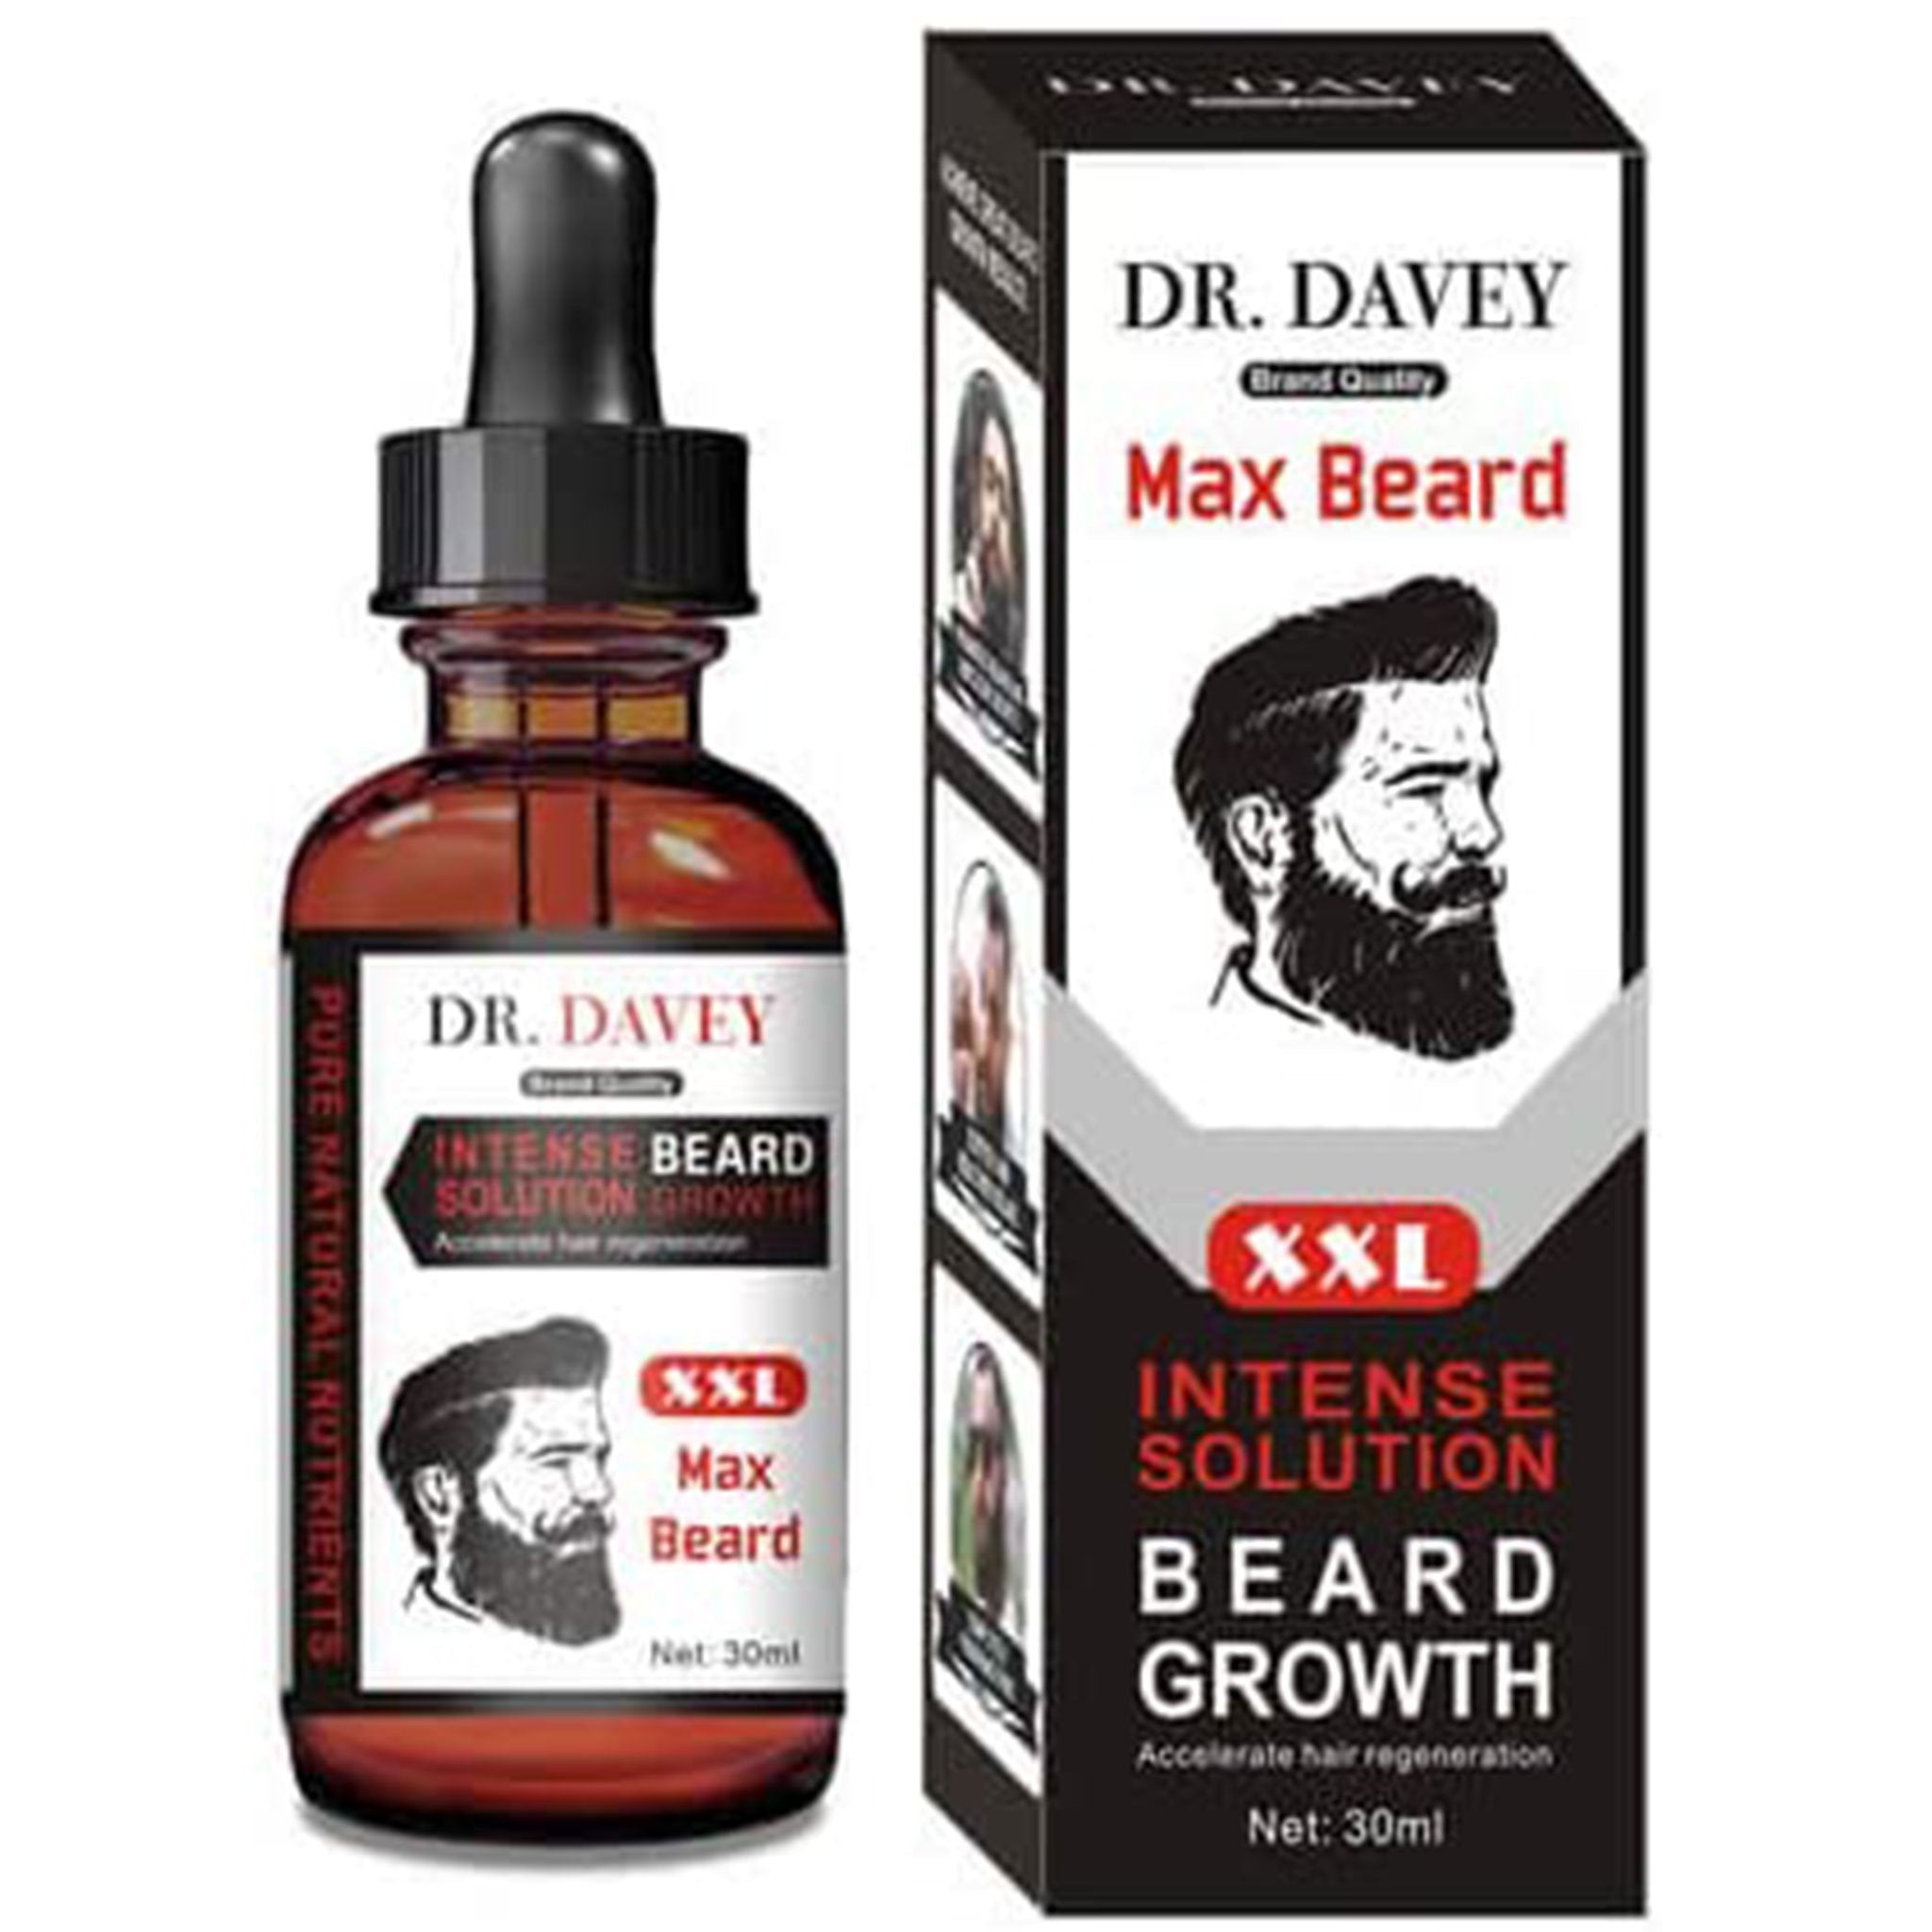 Dr Davey Max Beard Growth Intense Solution 30ml